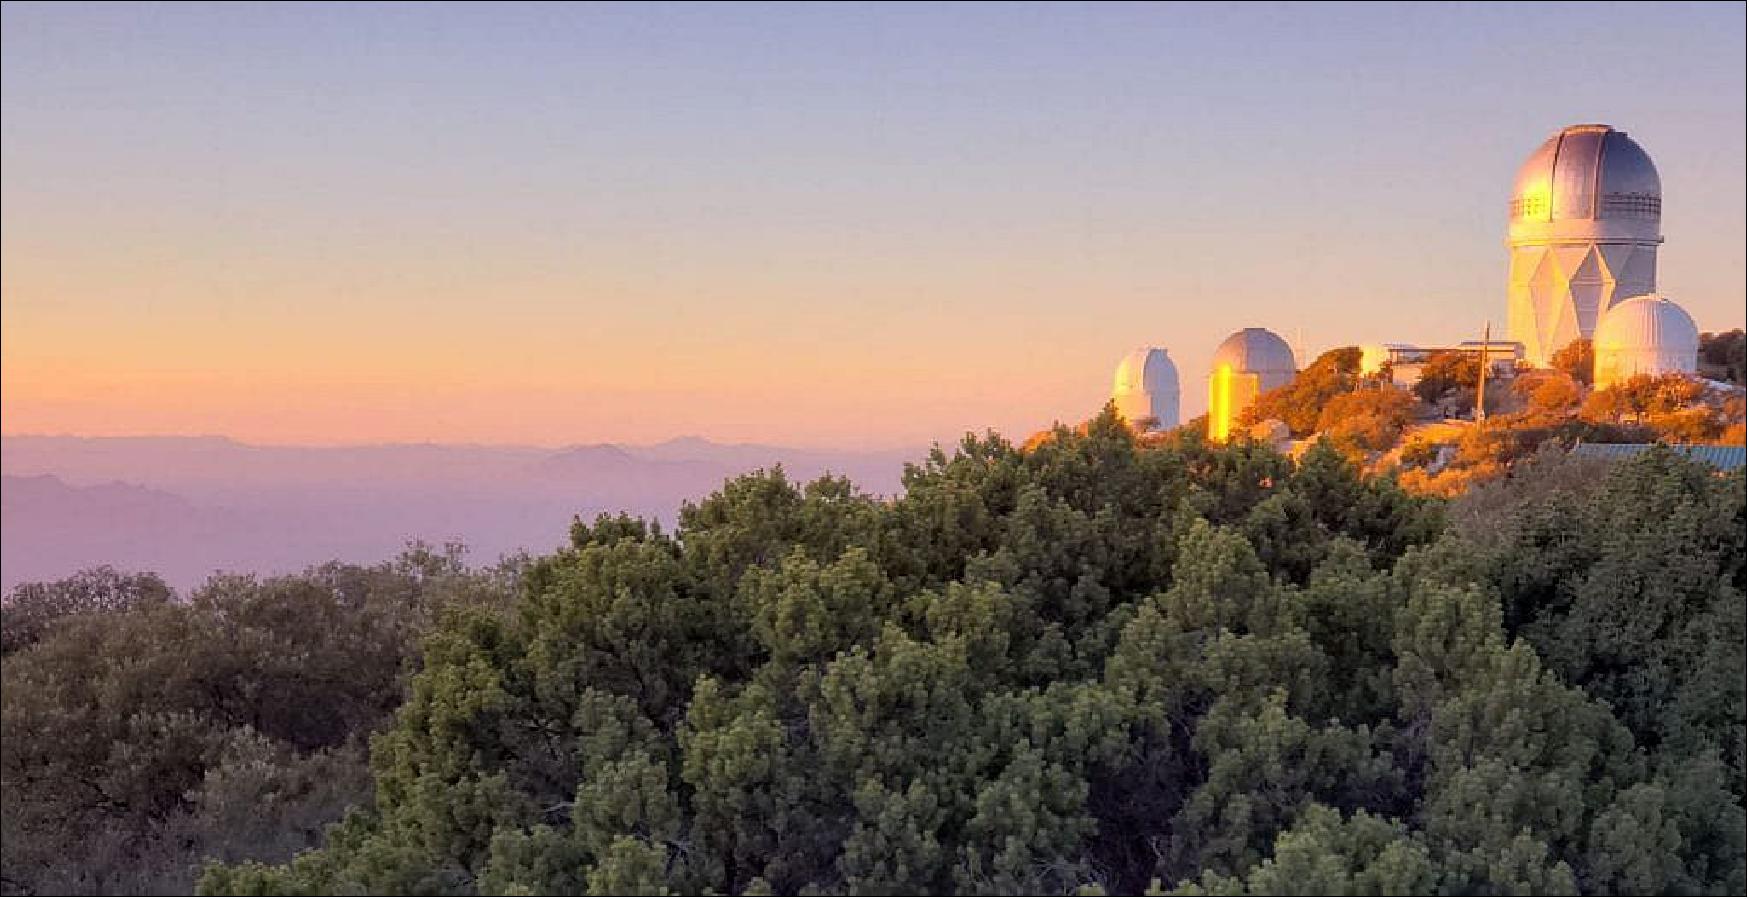 Figure 5: Sunset over Kitt Peak National Observatory during NEID commissioning in January 2020 (photo credit: Paul Robertson)